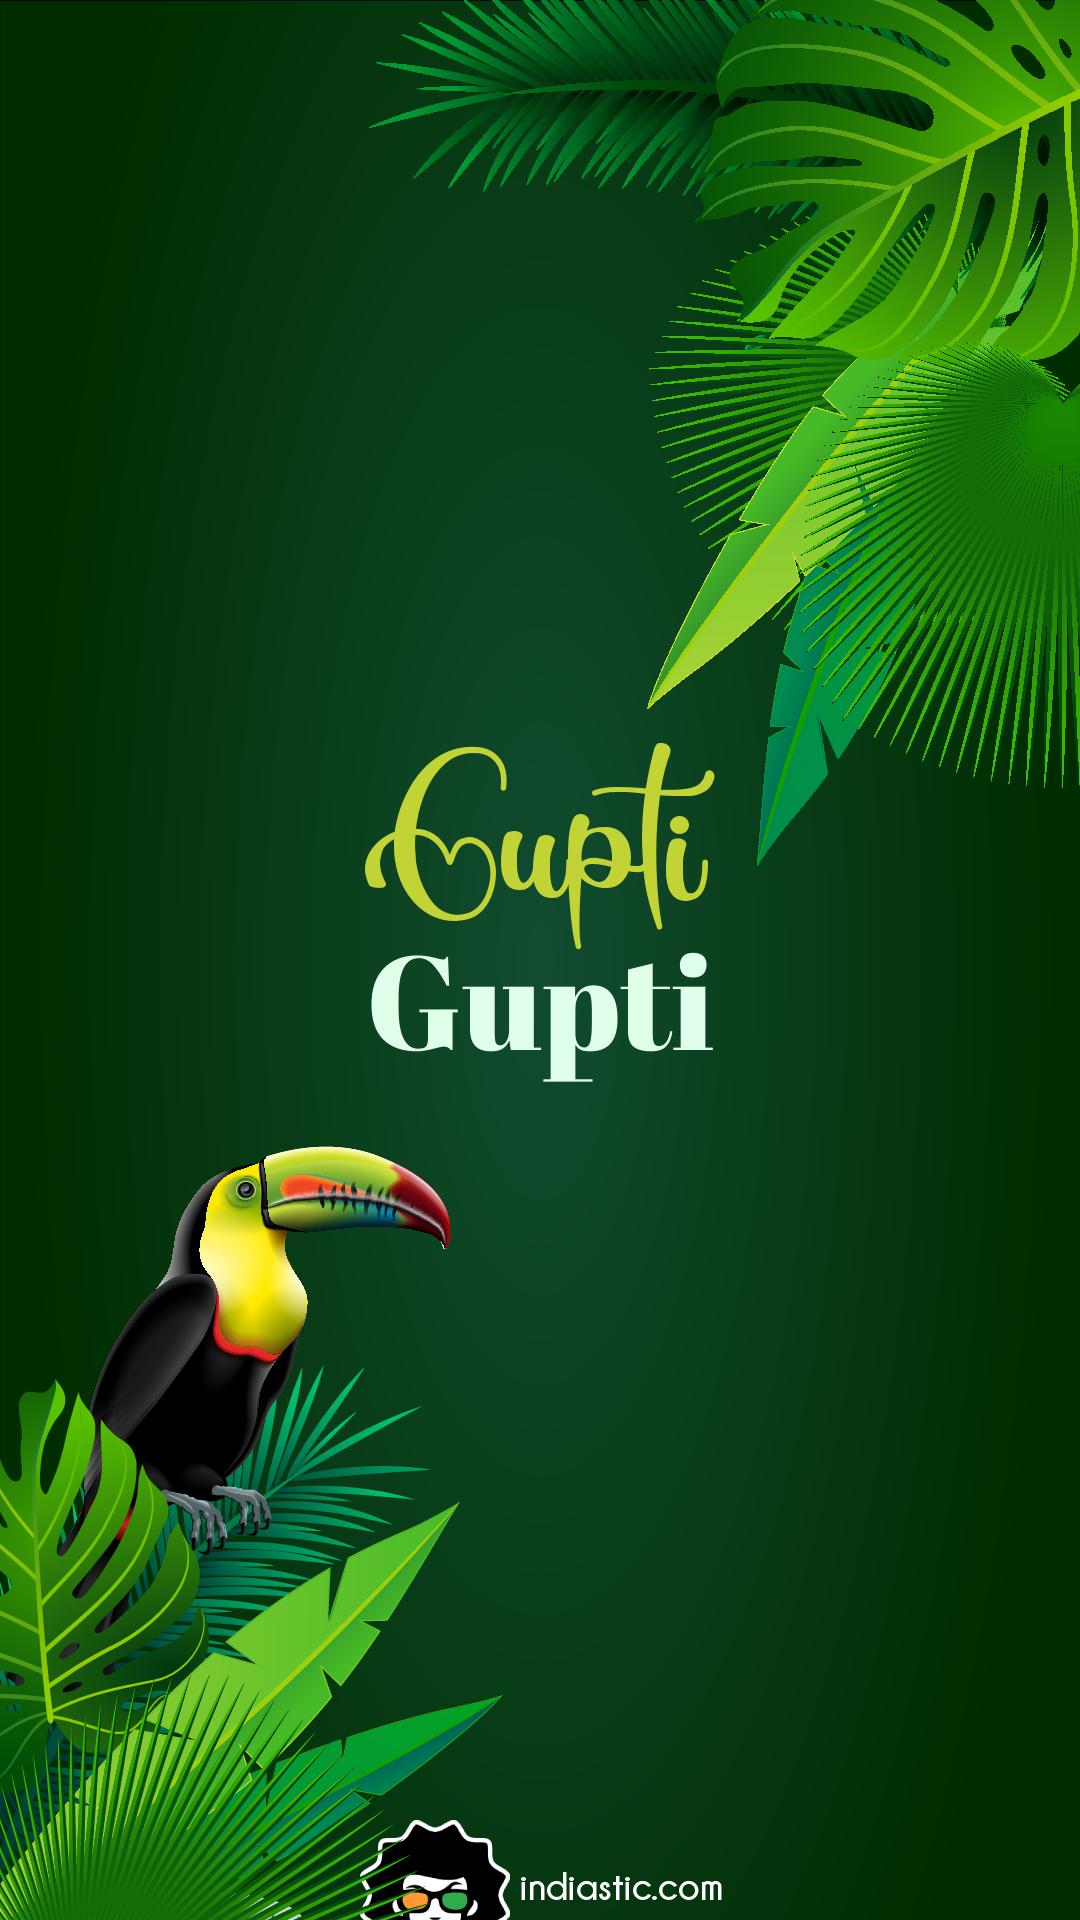 Jungle theme story image with Gupti name